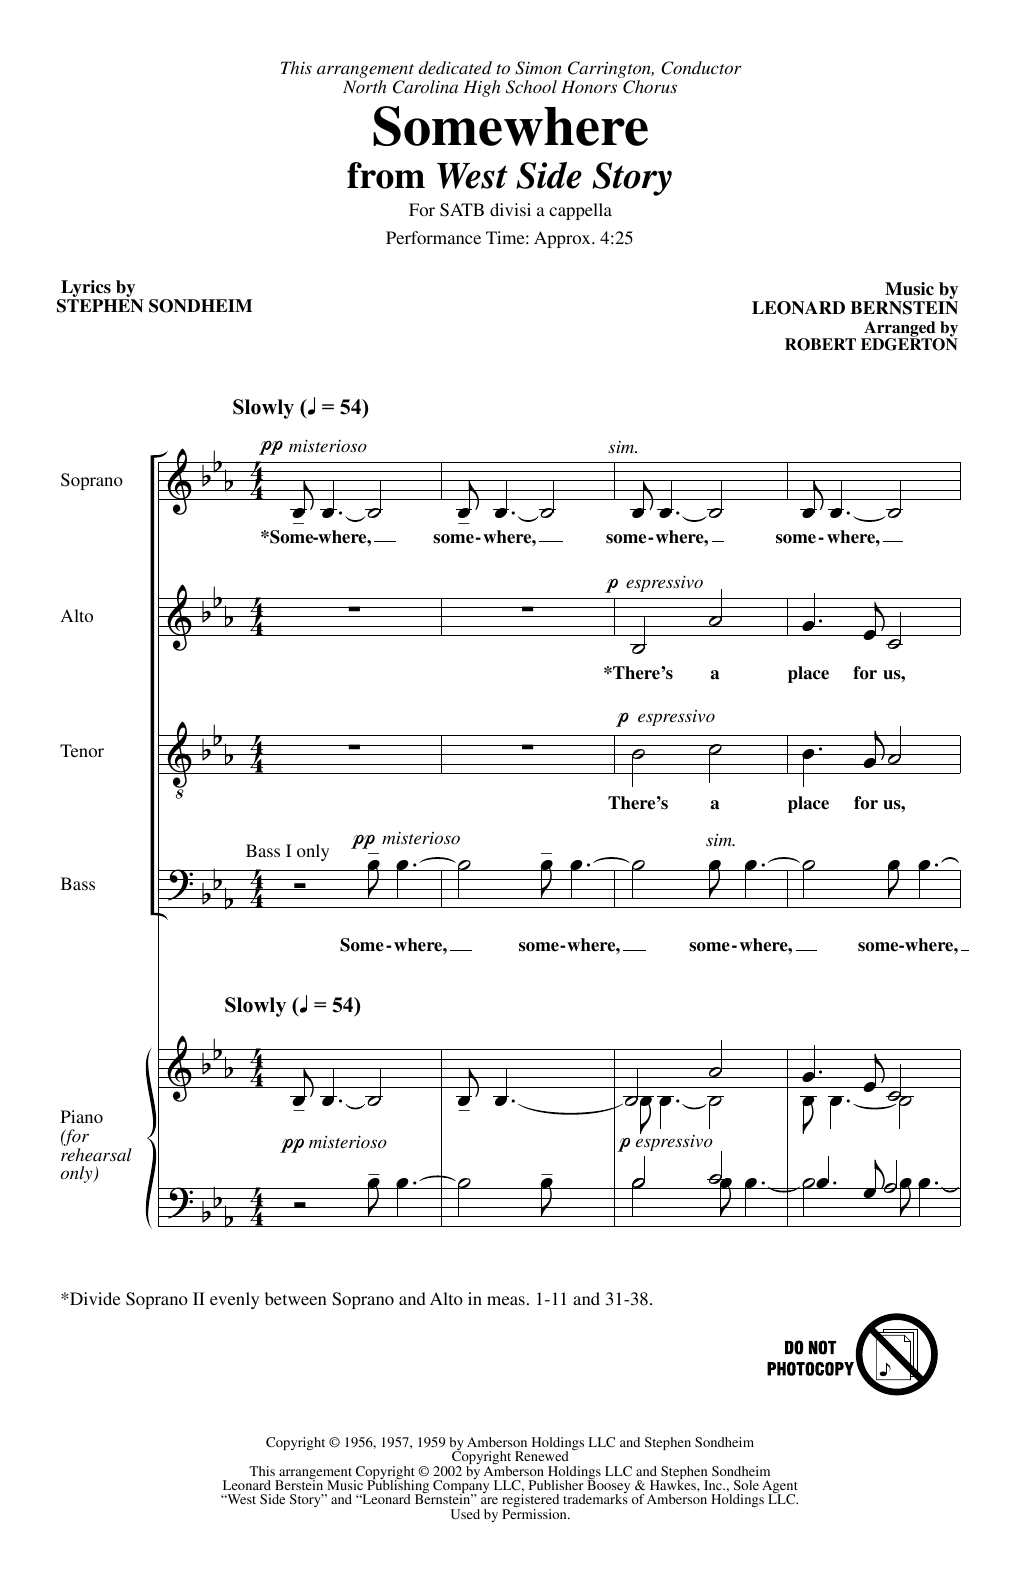 Leonard Bernstein Somewhere (from West Side Story) (arr. Robert Edgerton) sheet music notes and chords arranged for SATB Choir